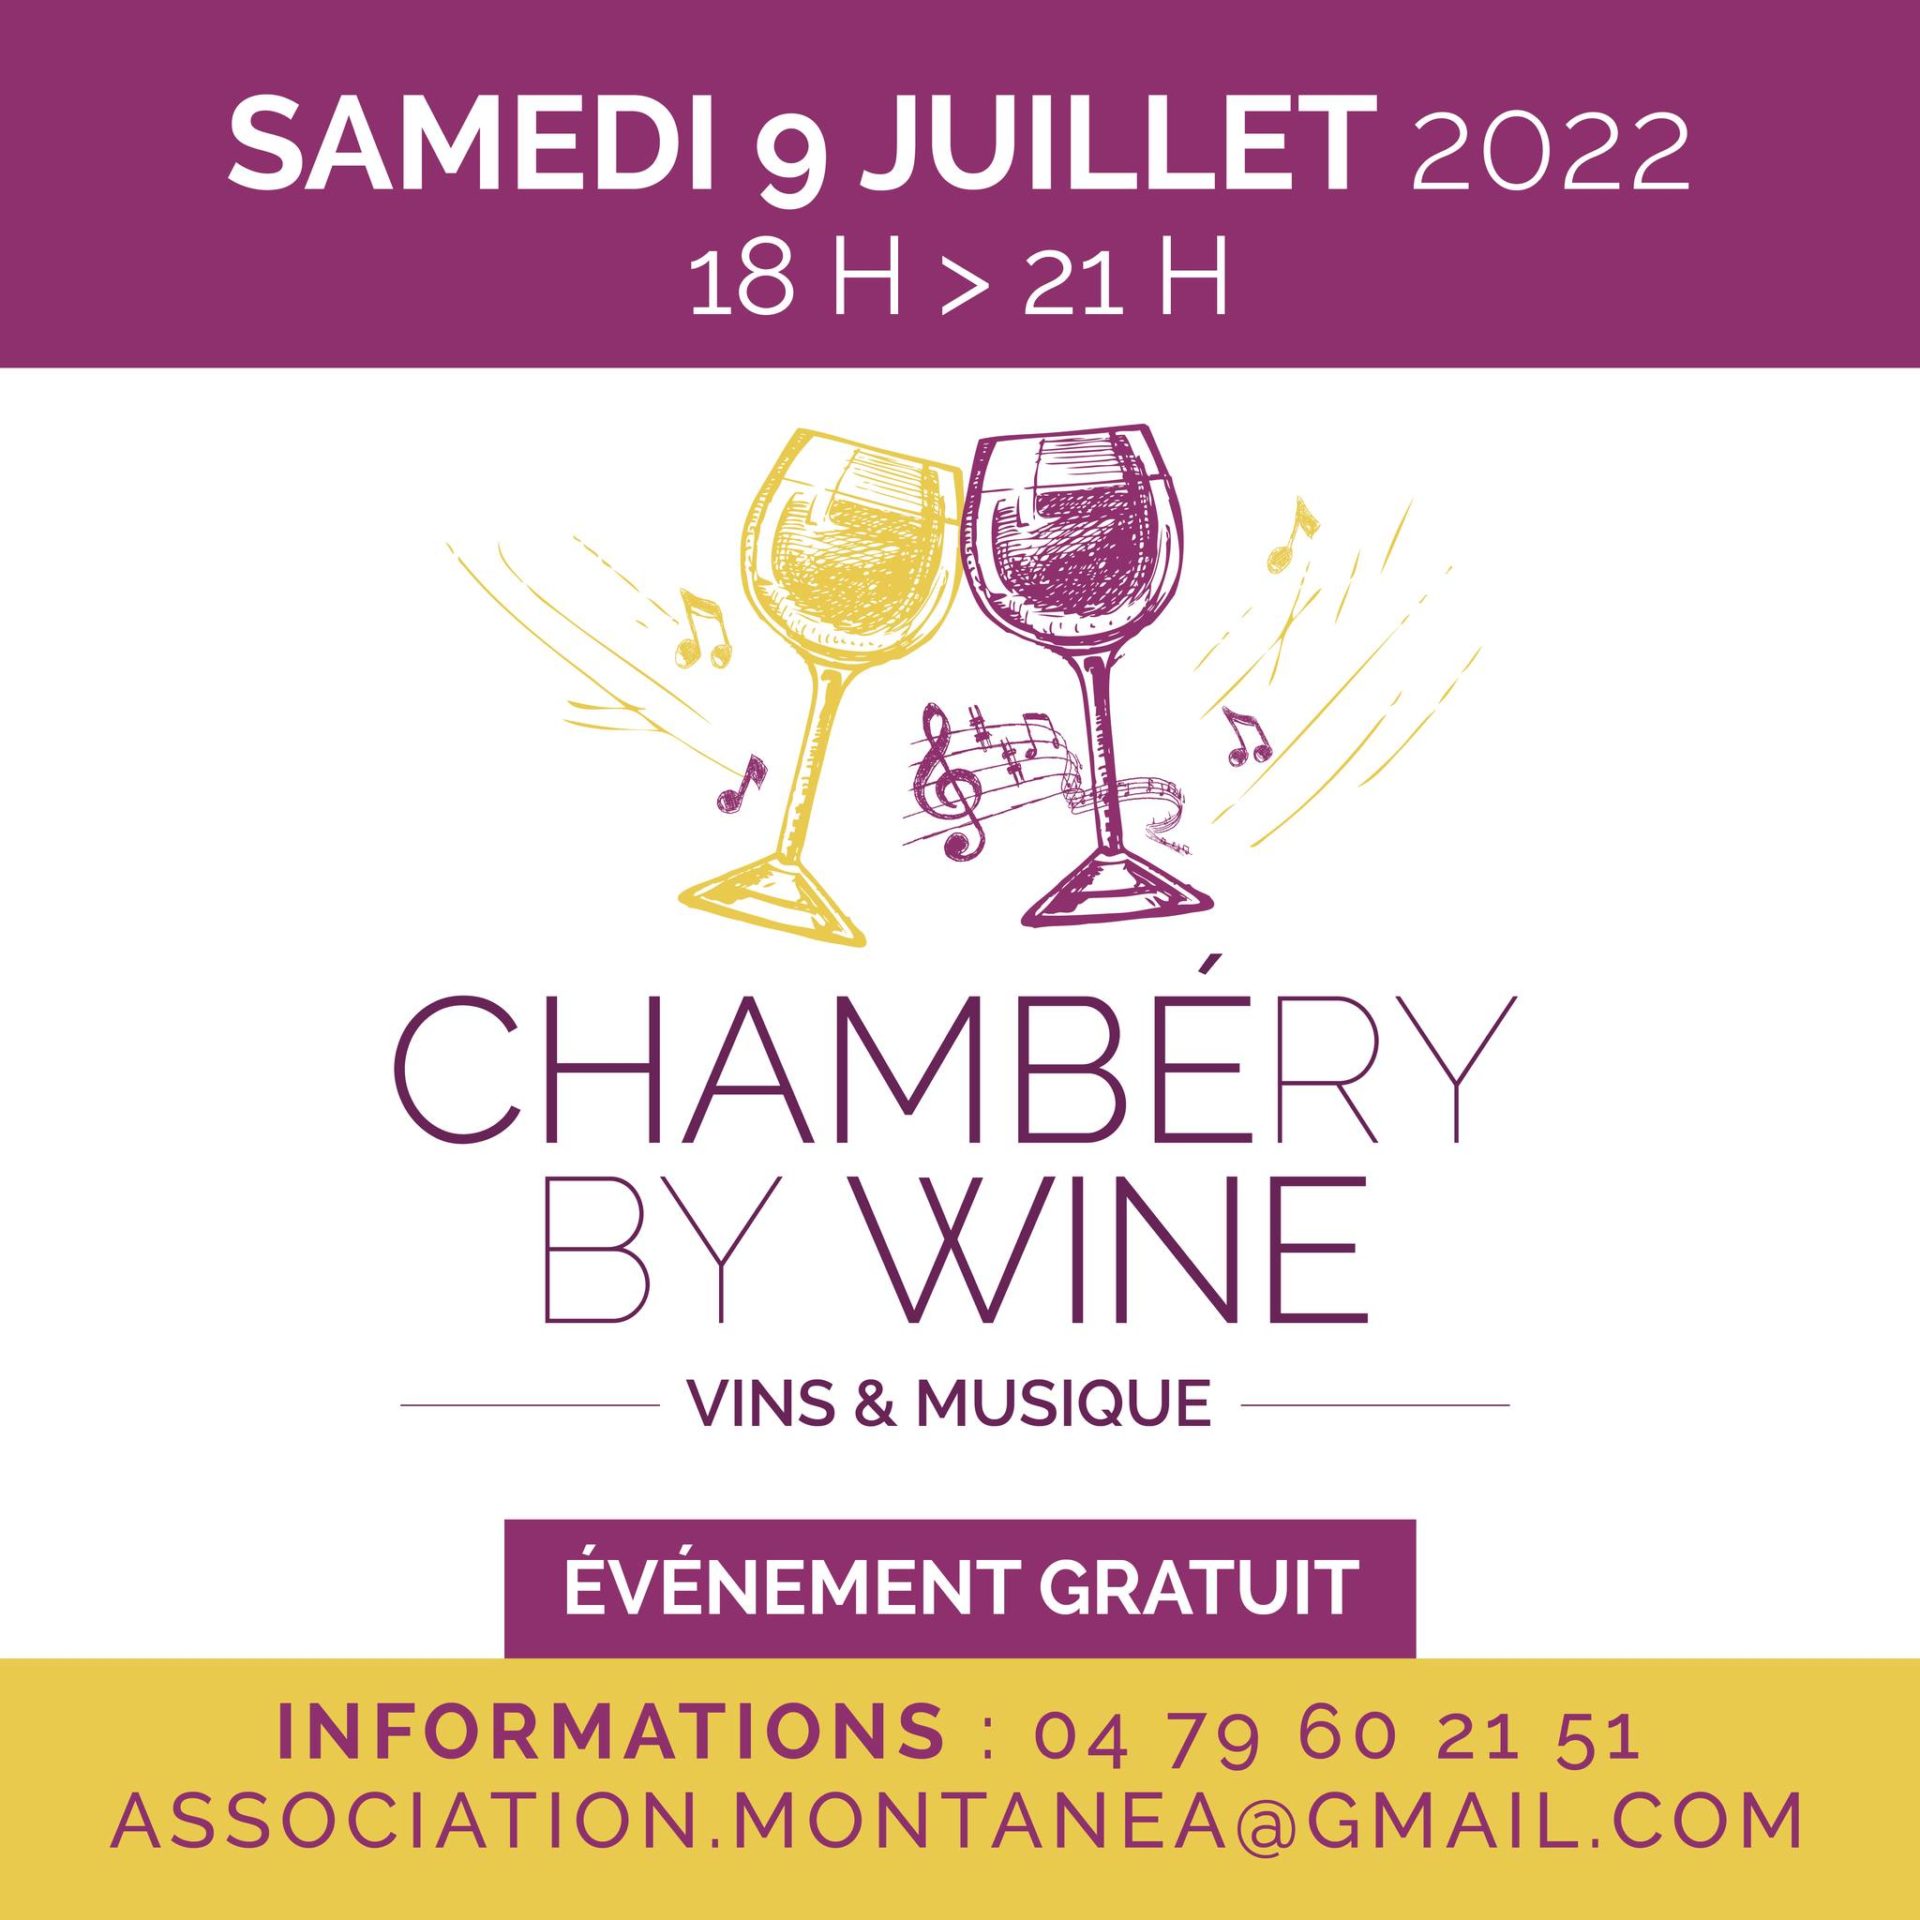 Chambéry by wine